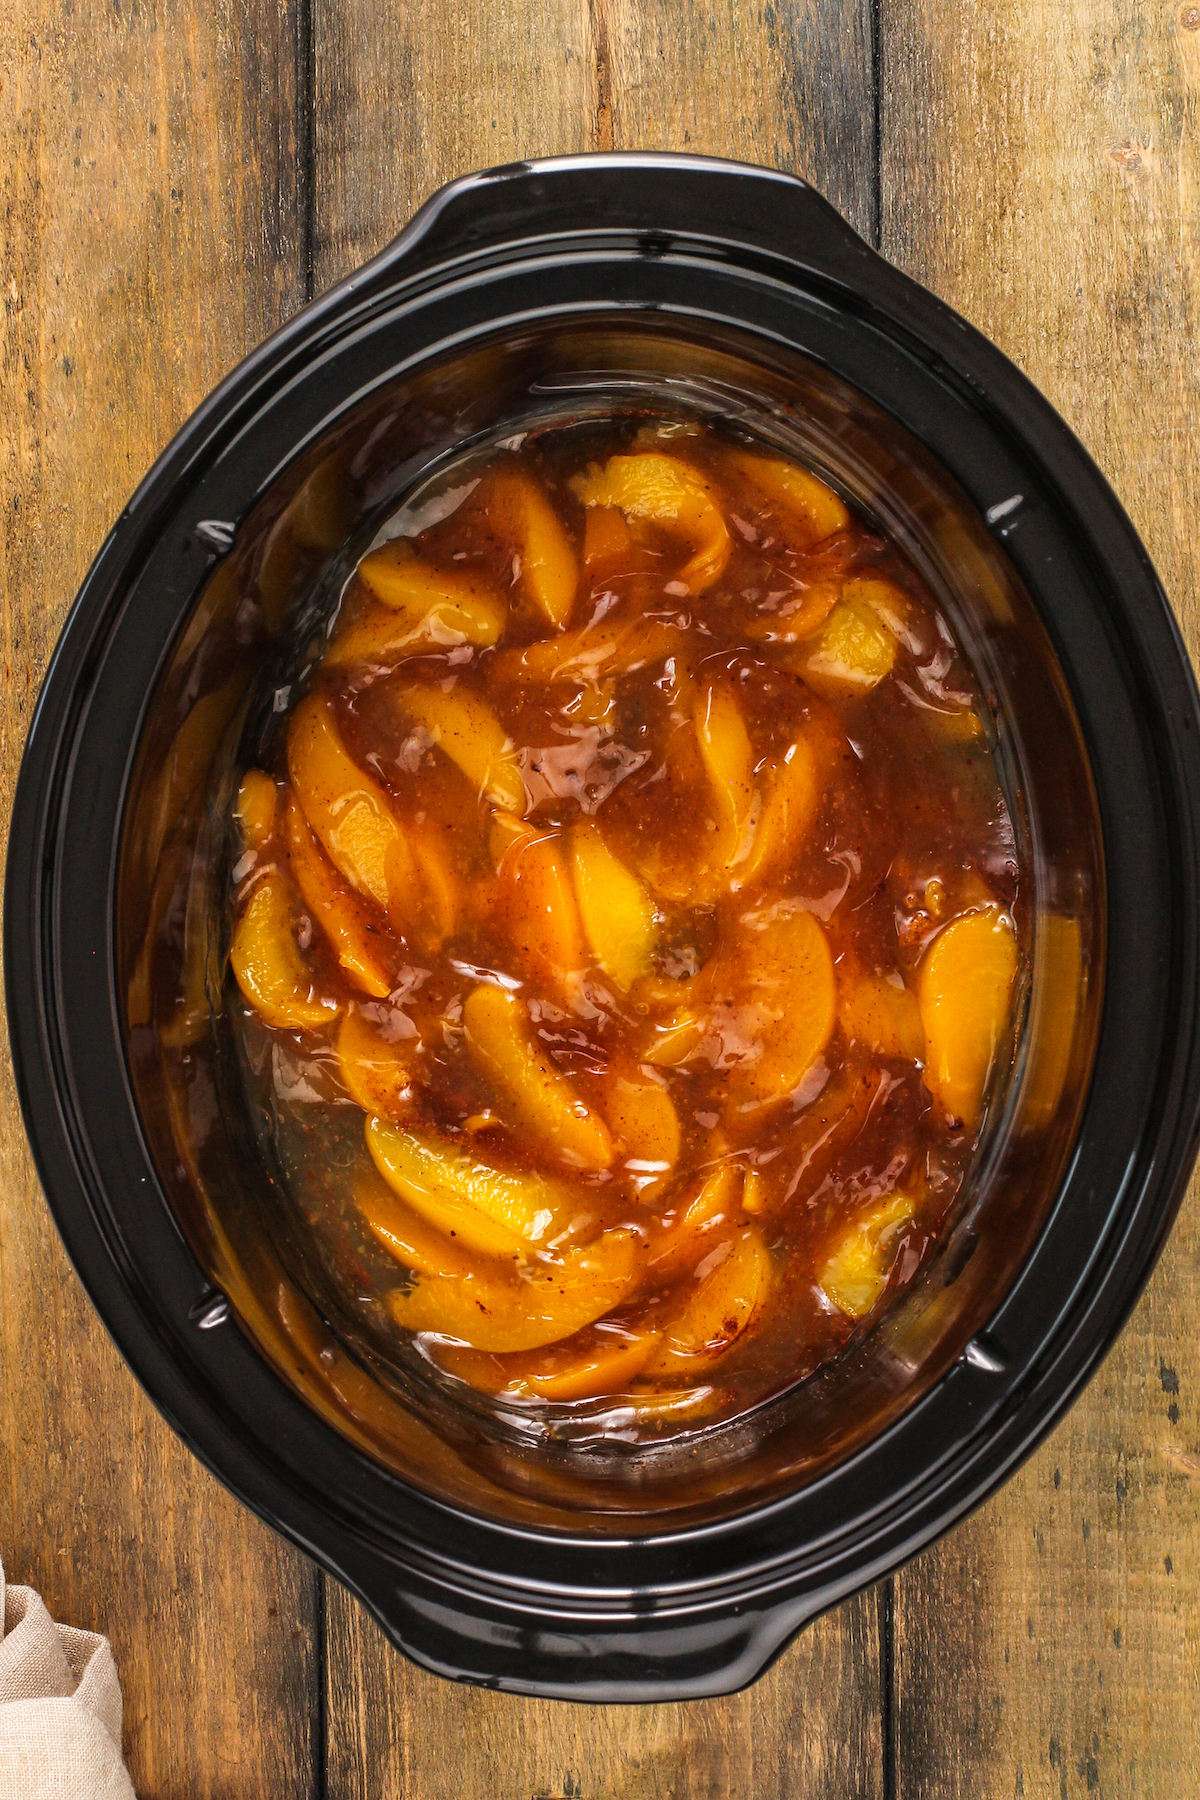 Peach filling mixture inside the bowl of a crock pot.